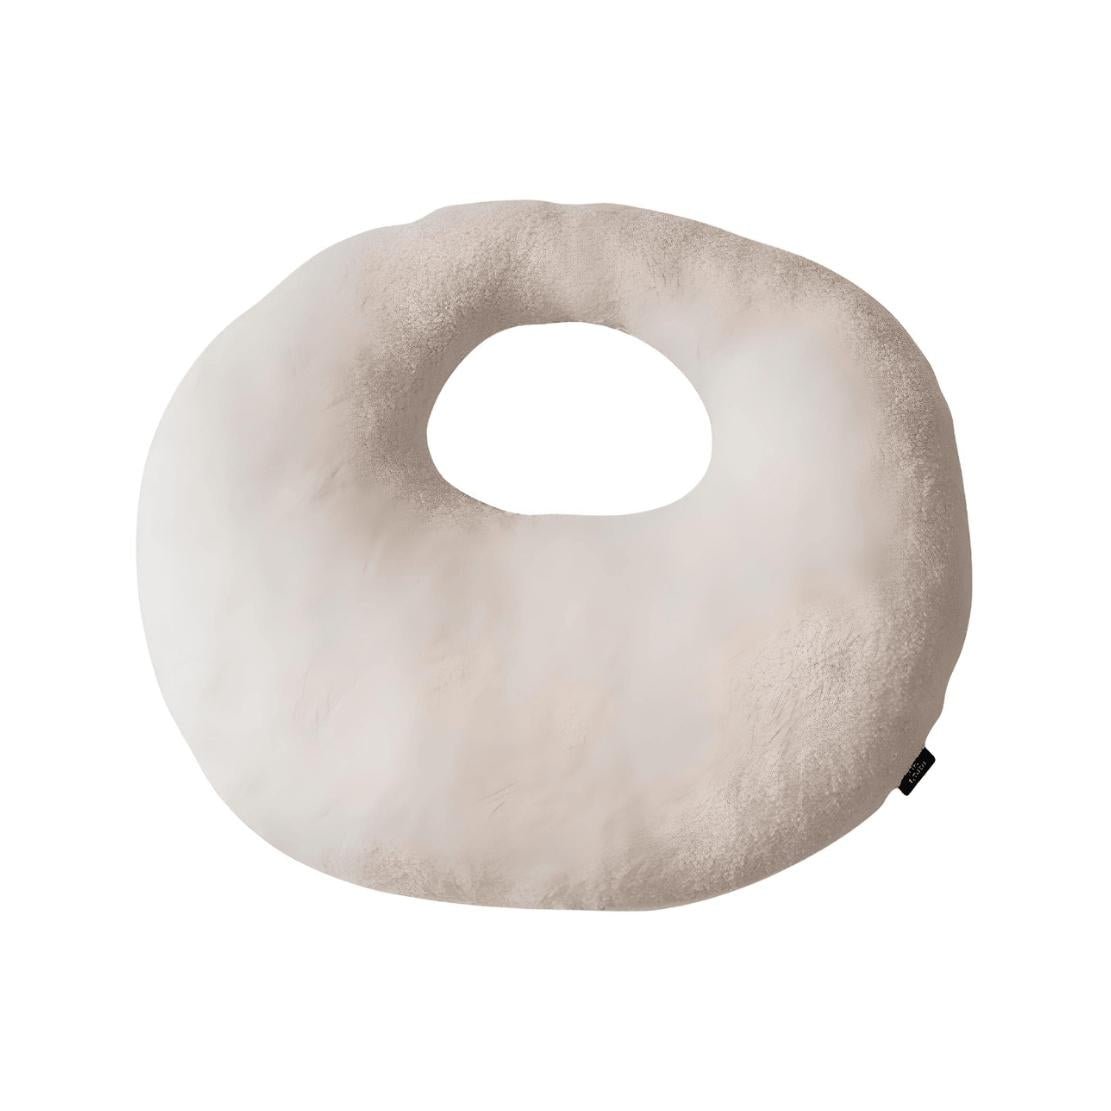 White, soft round bag decorative throw pillow